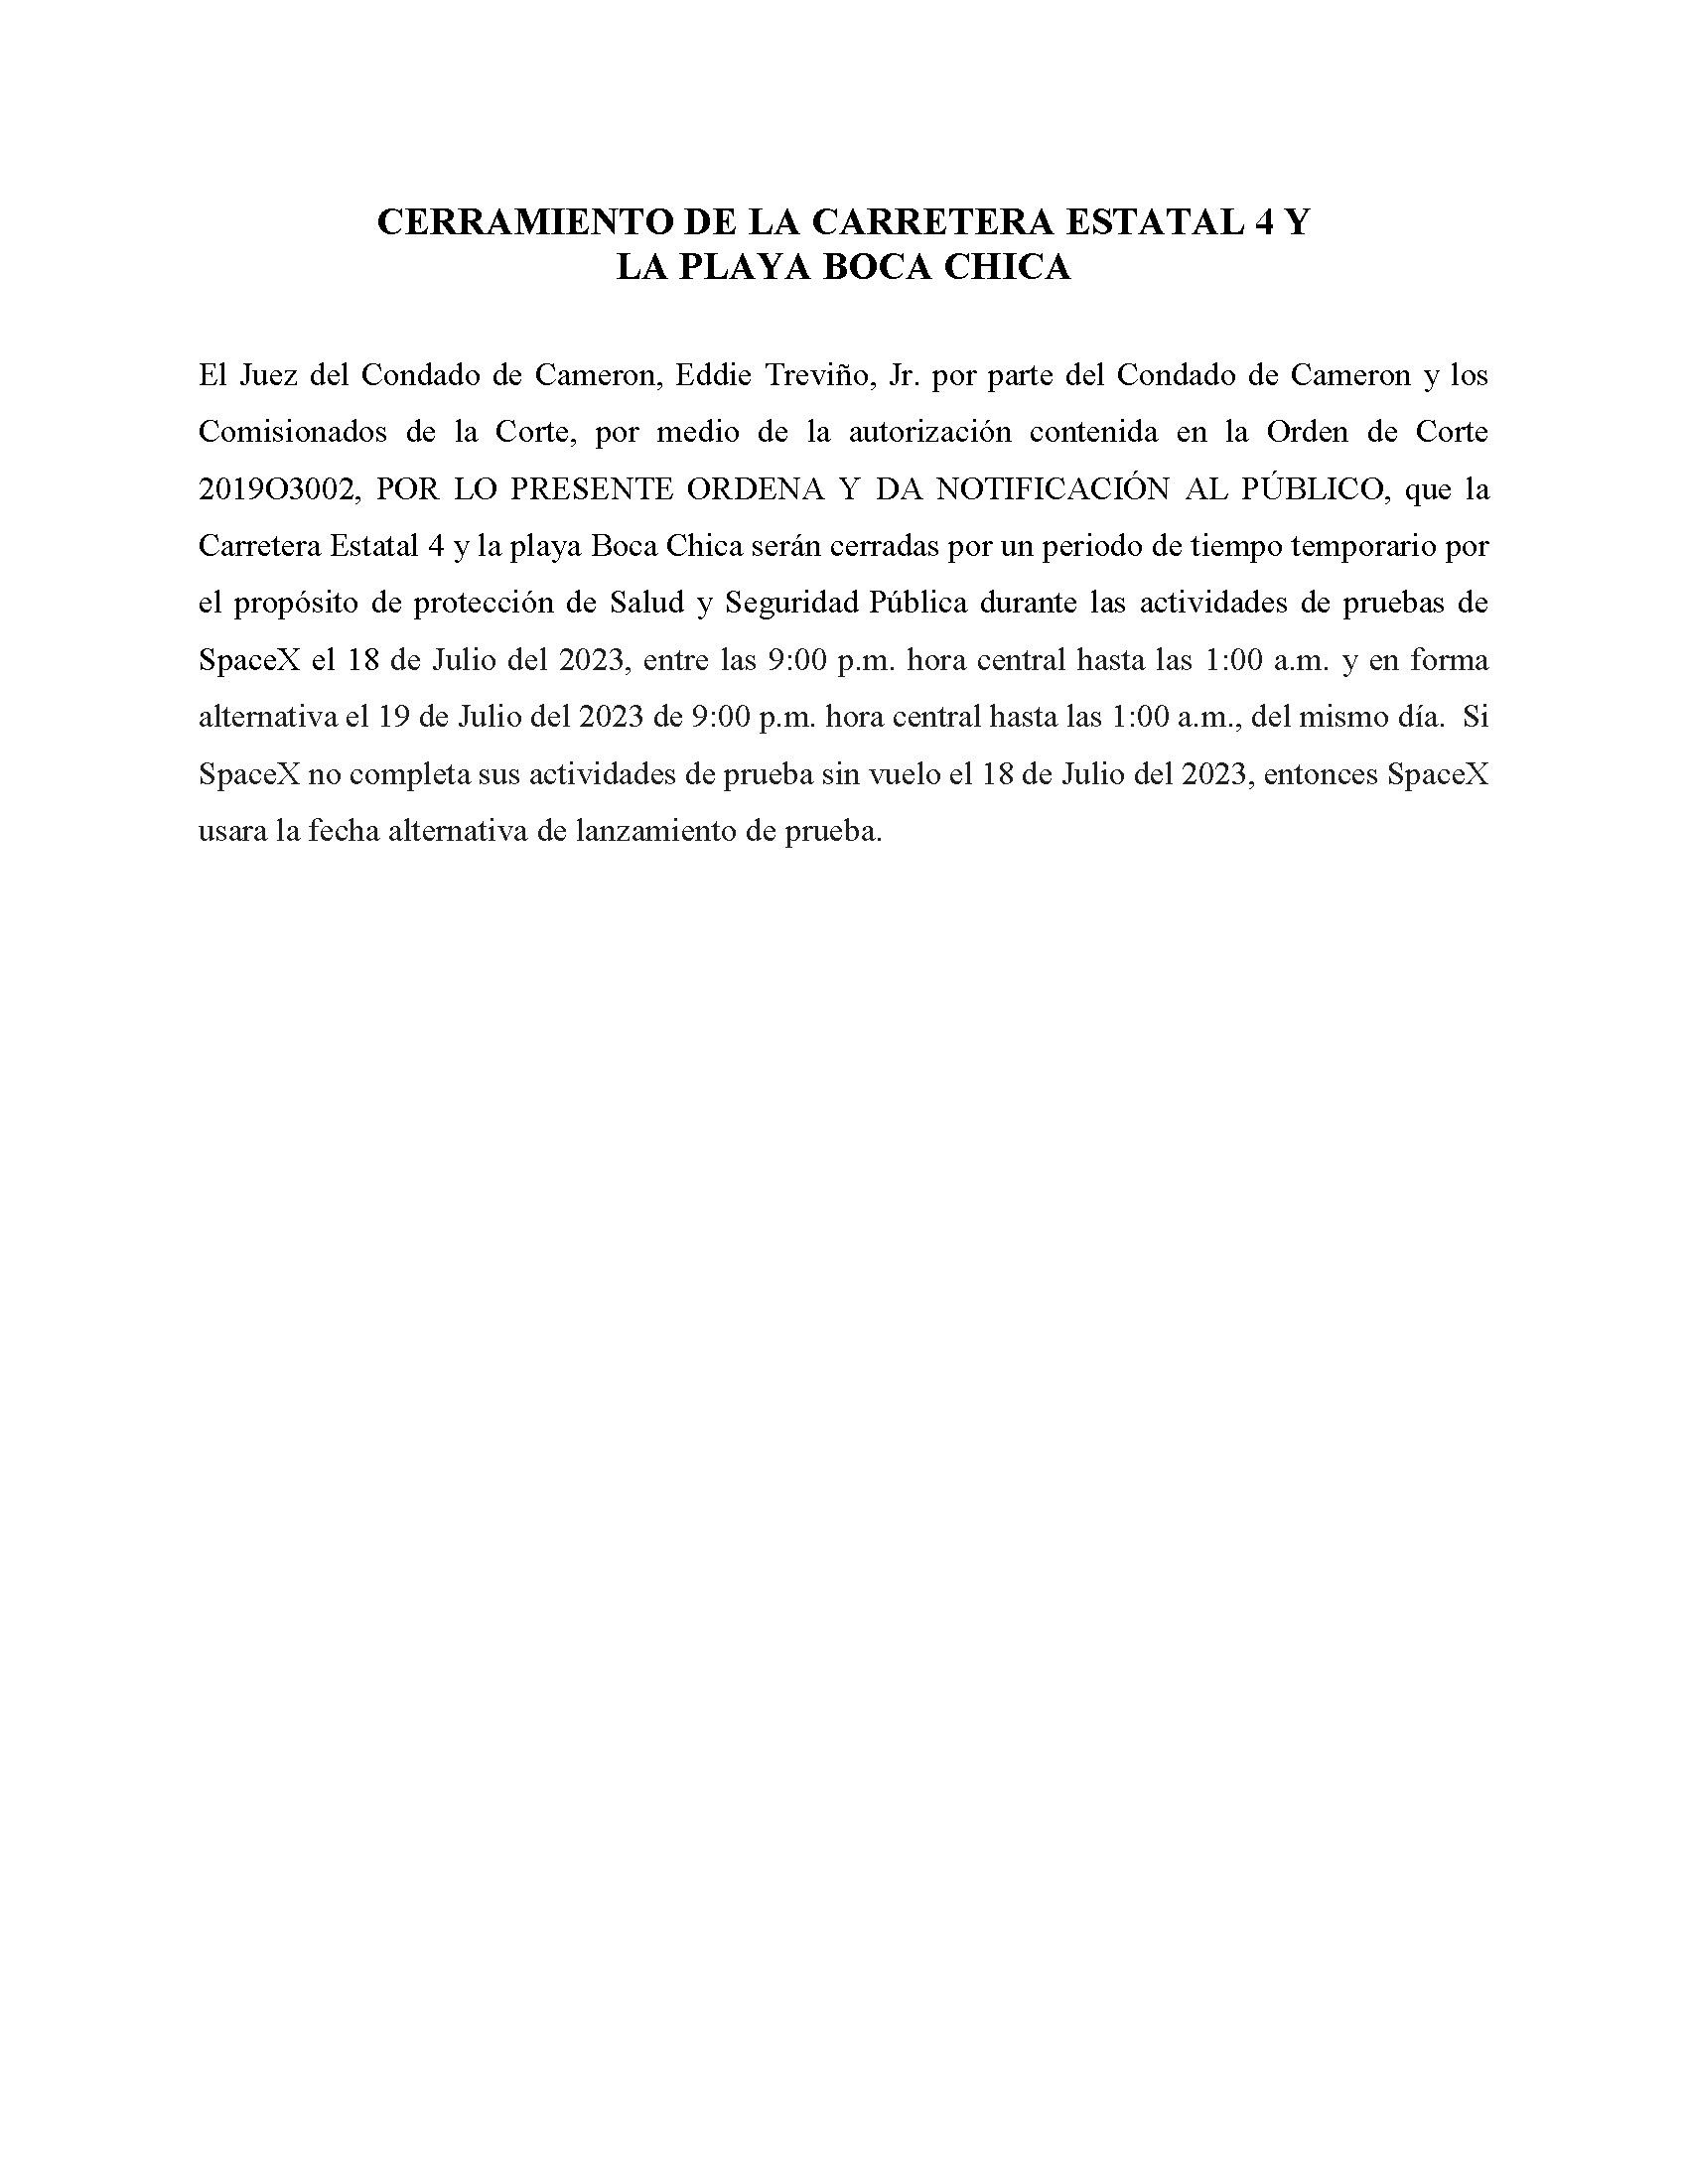 ORDER.CLOSURE OF HIGHWAY 4 Y LA PLAYA BOCA CHICA.SPANISH.07.18.23